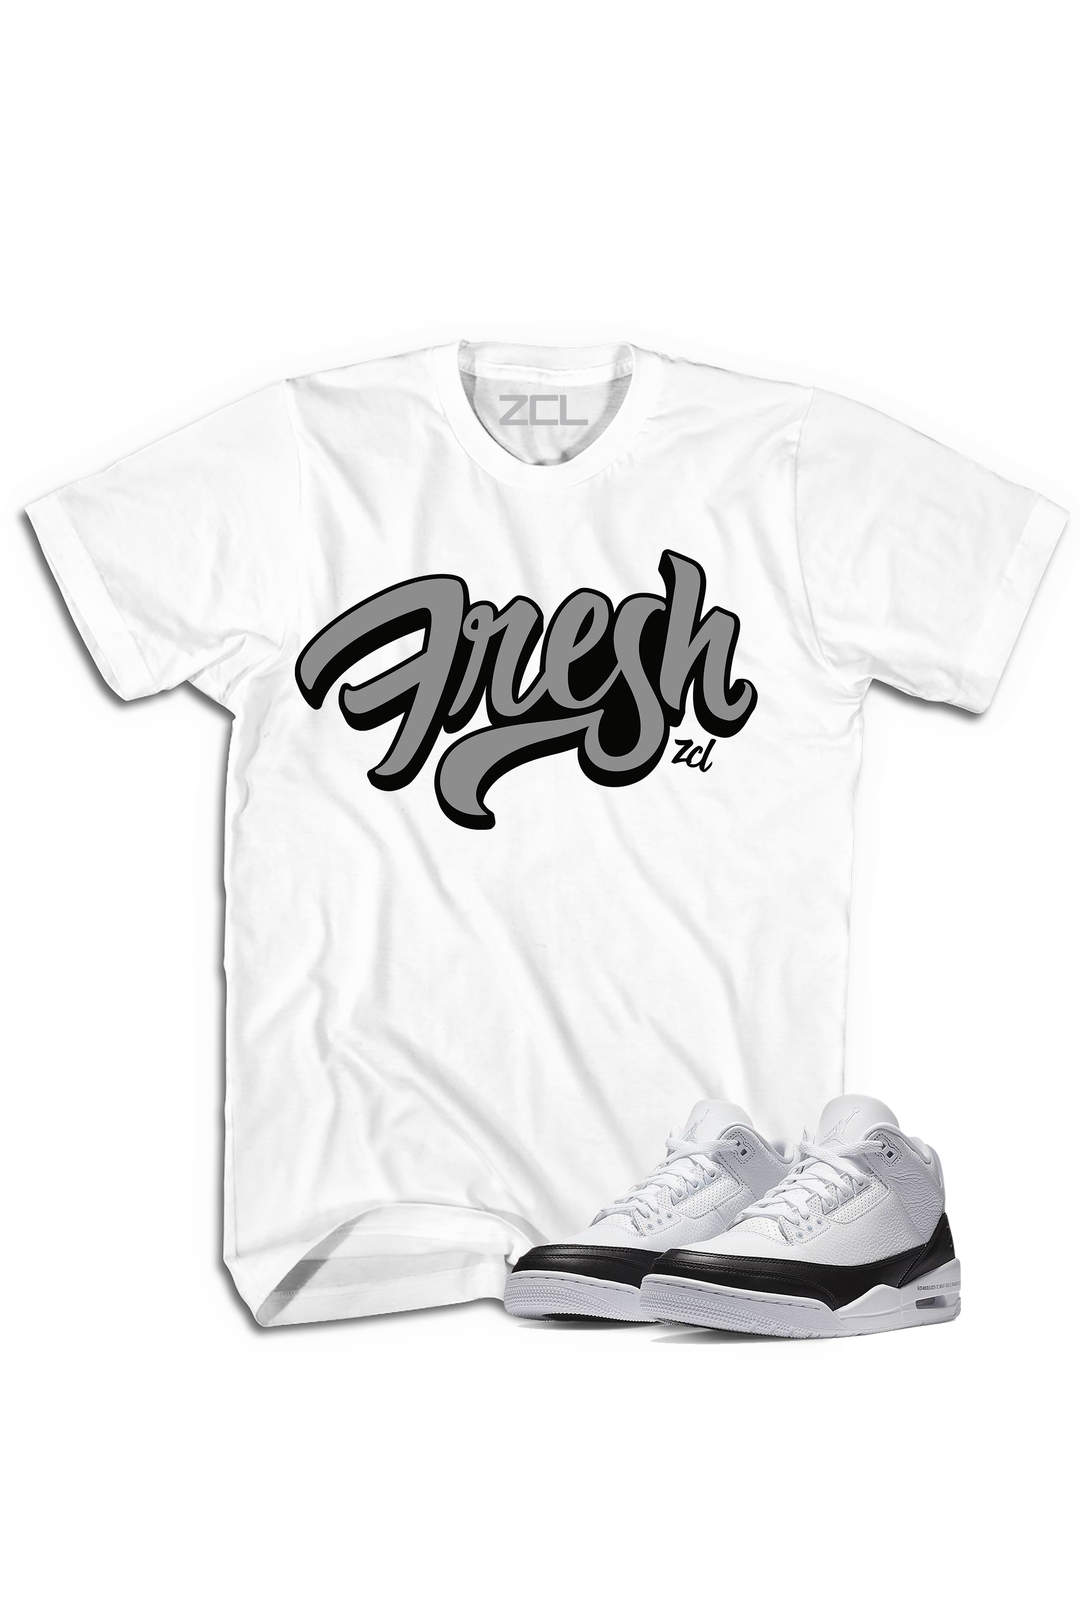 Air Jordan 3 "Fresh" Tee Fragment - Zamage